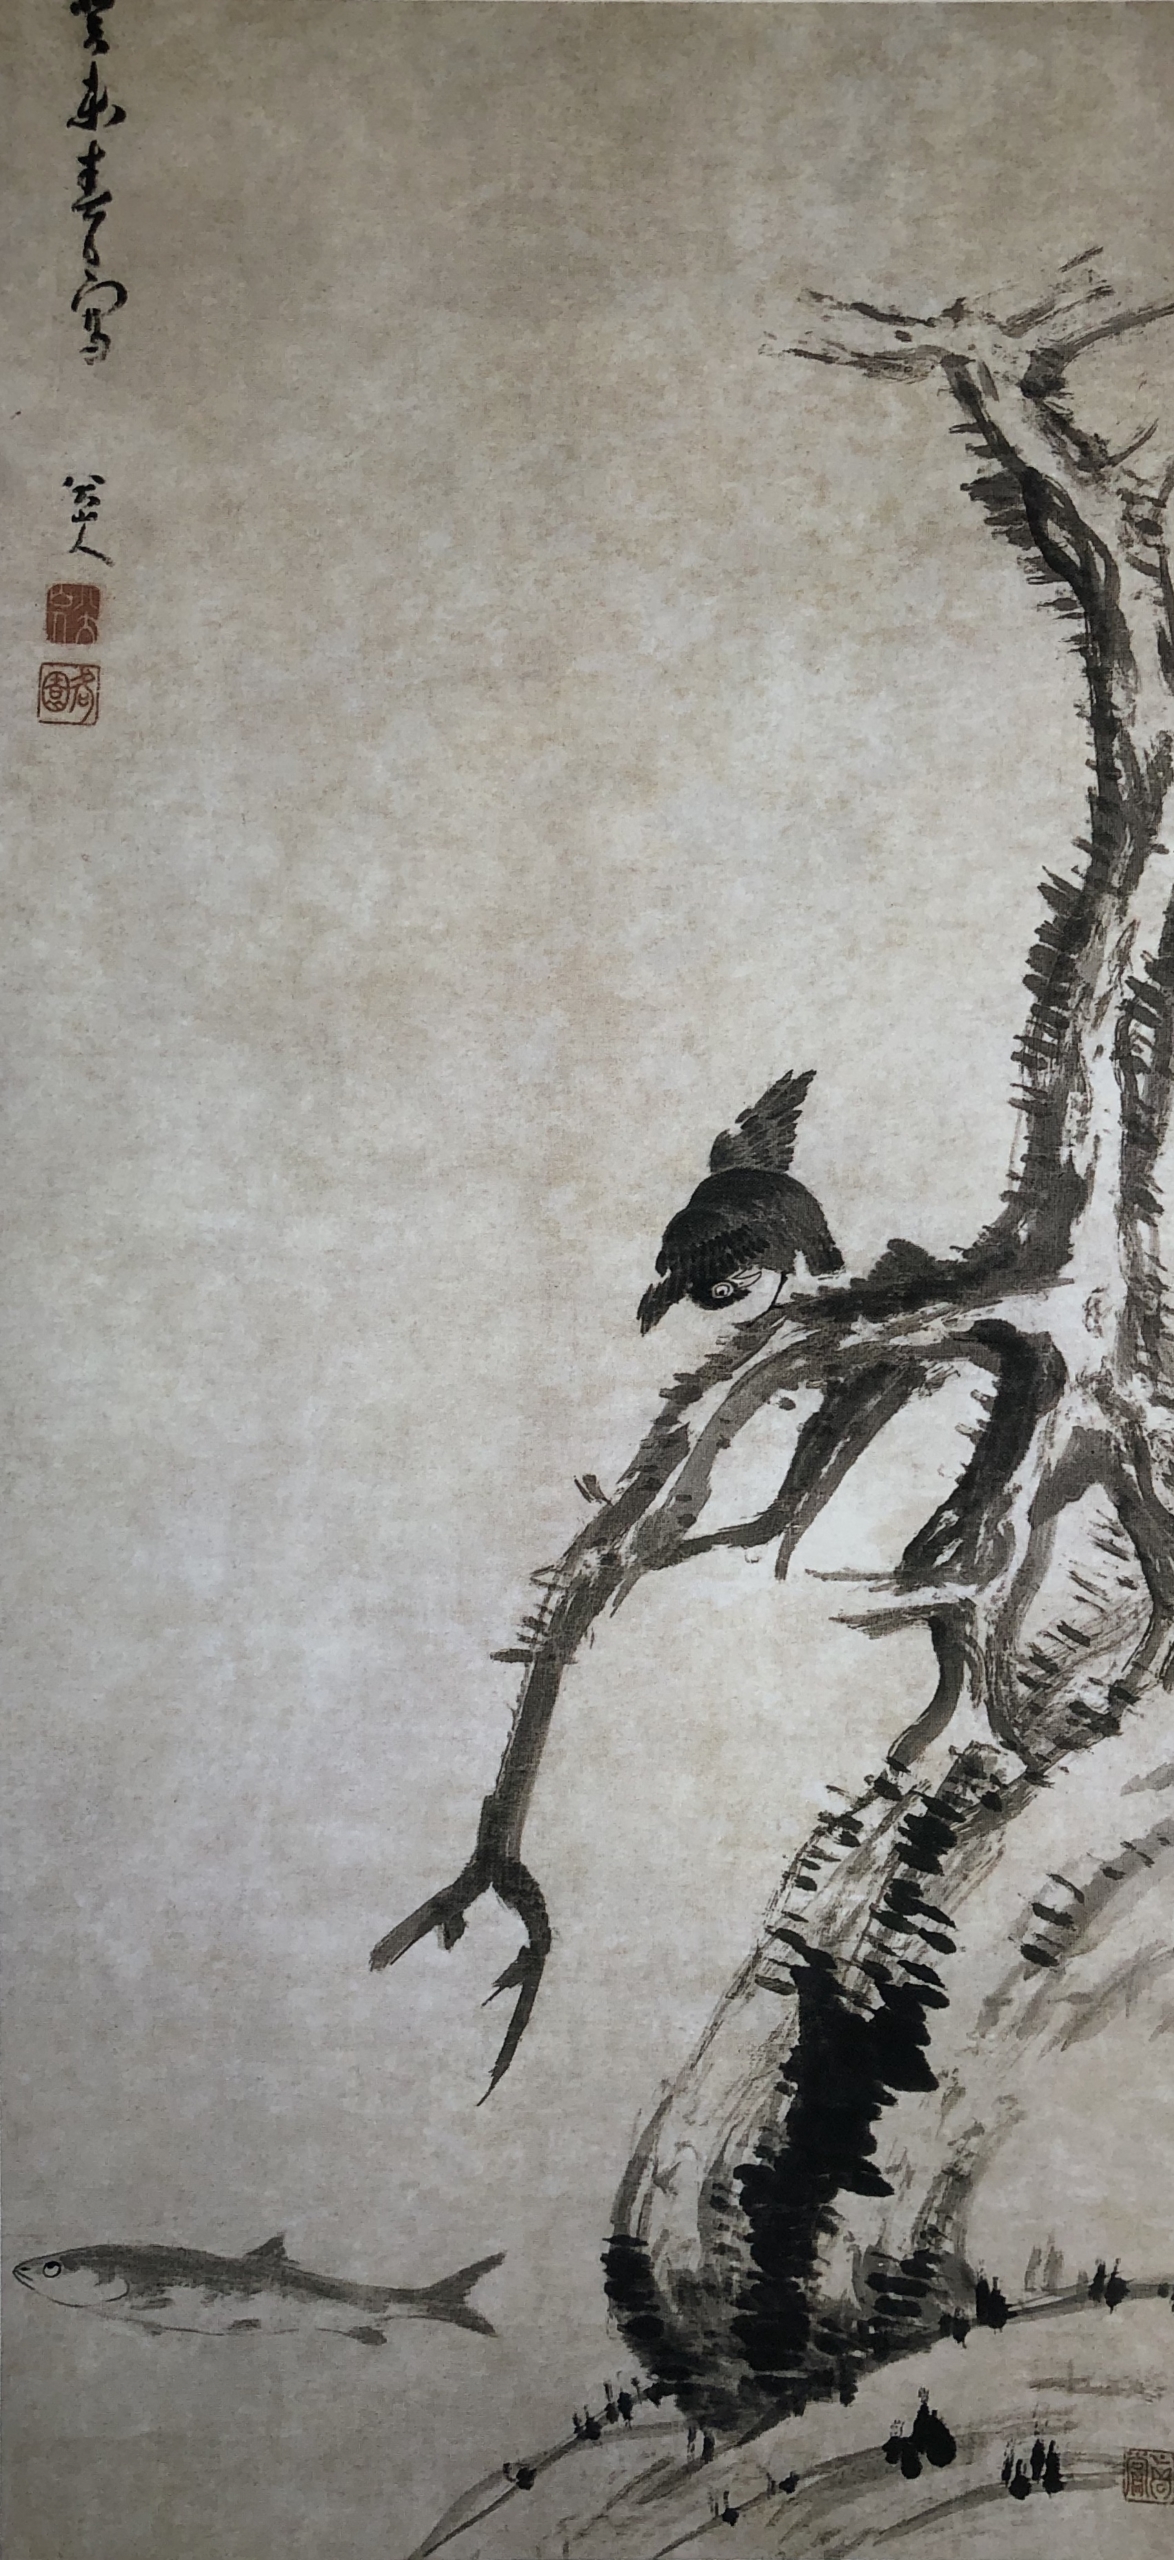 24H限定SH244 古美術 掛け軸 中国・宋時代の書画家 蘇漢臣 「博古図」 絹本 立軸 巻き物 真作 肉筆保証 妙墨逸品 時代物 掛軸